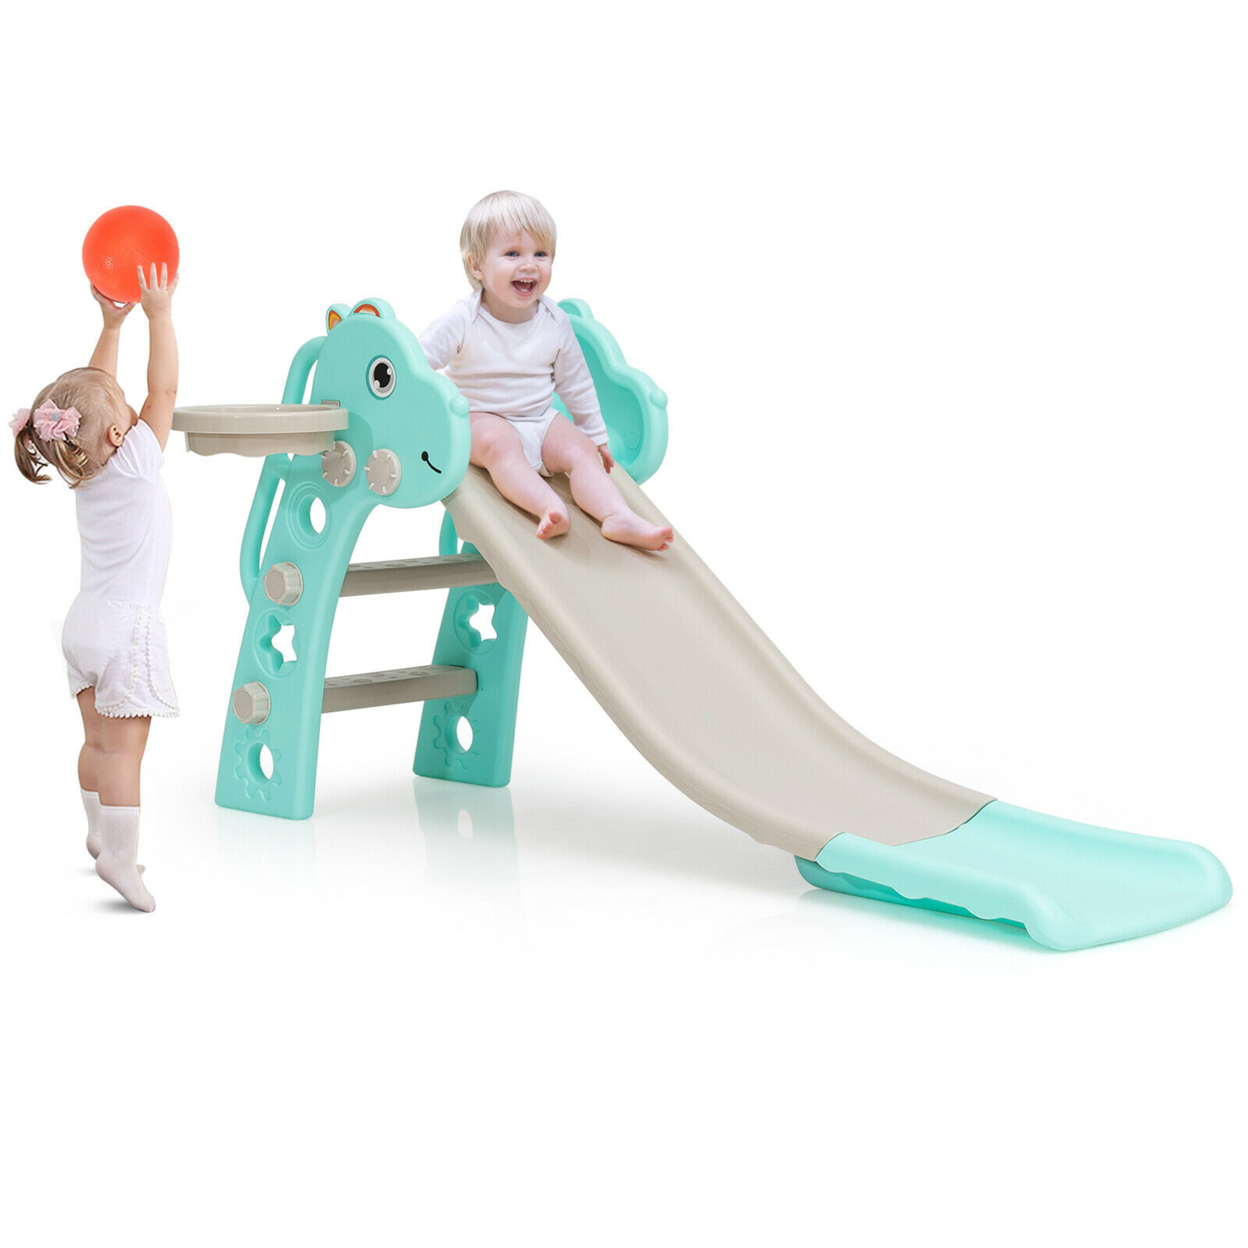 3 In 1 Kids Slide Baby Play Climber Slide Set W/Basketball Hoop - Green